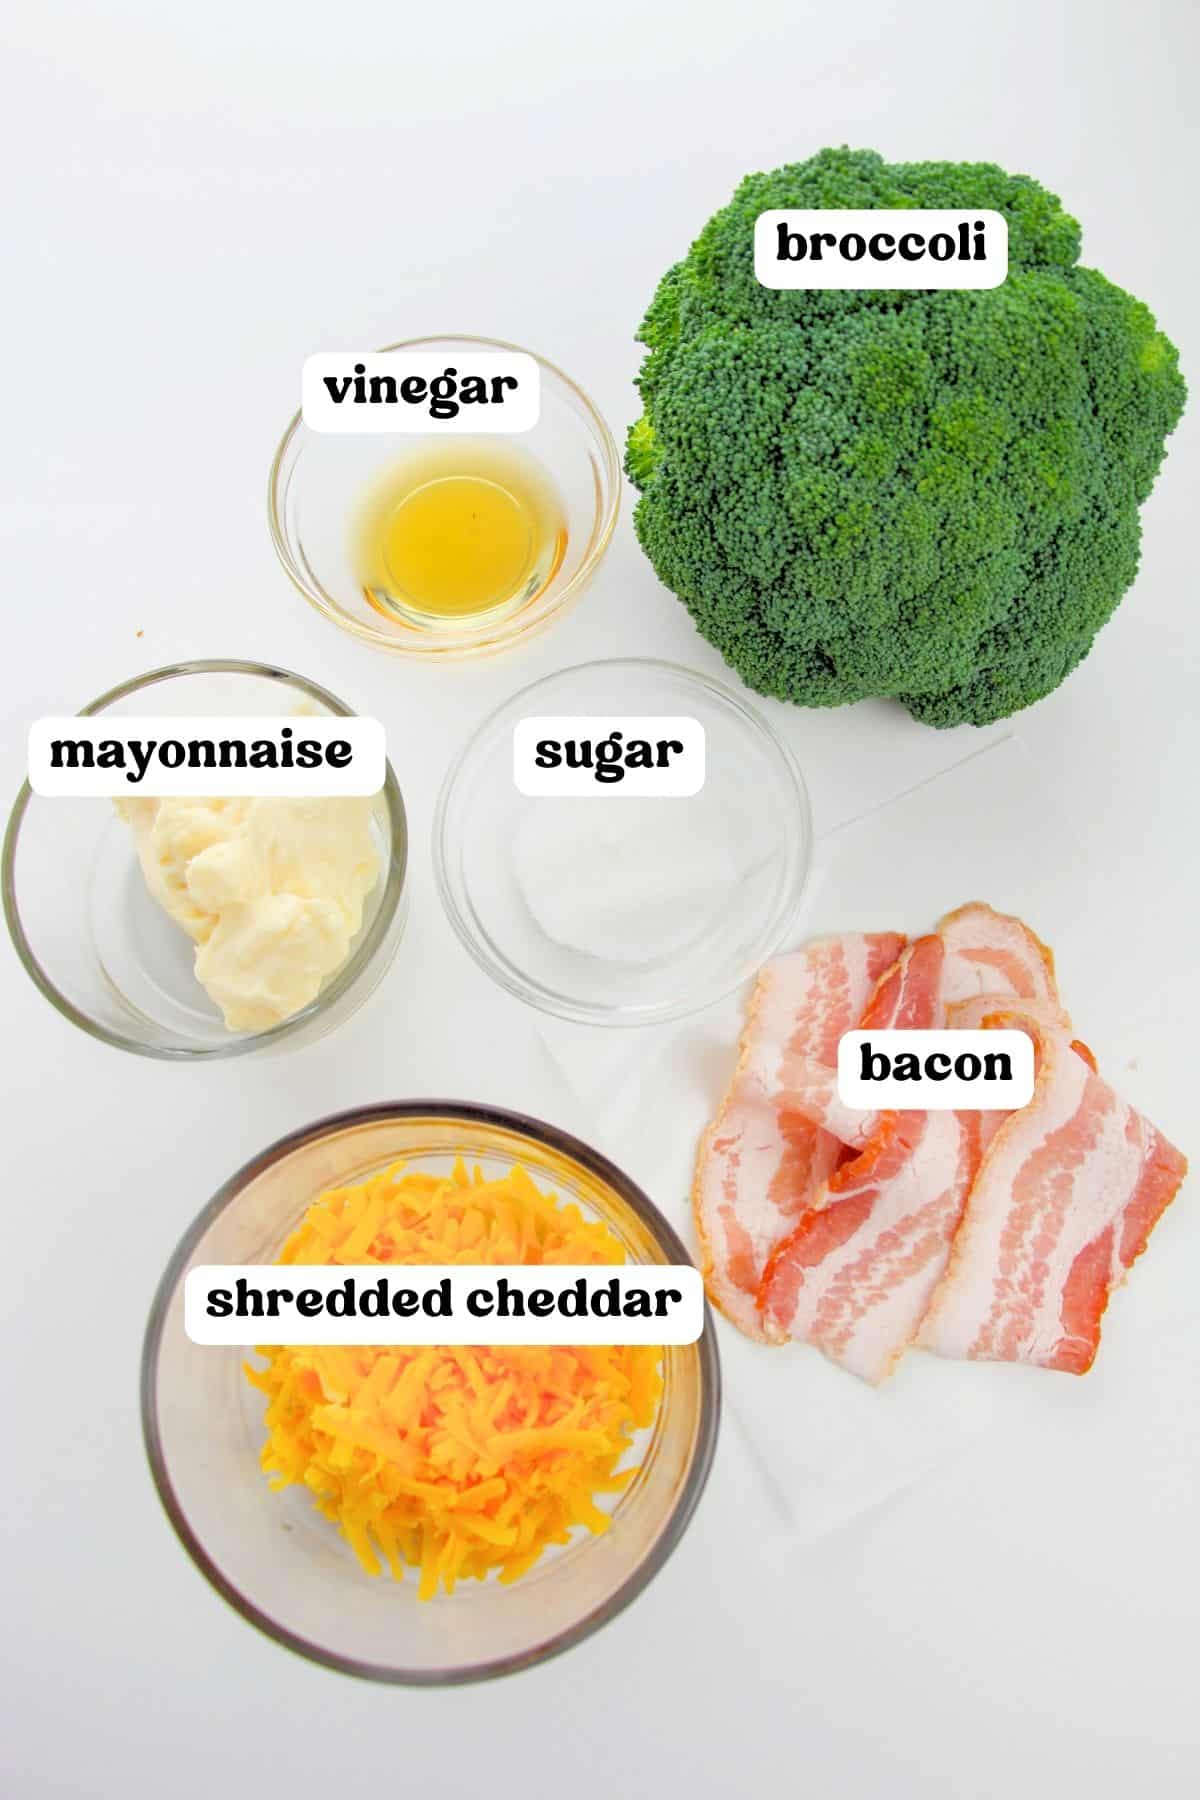 Ingredients for broccoli salad: head of fresh broccoli, vinegar, mayonnaise, sugar, shredded cheese, and bacon.